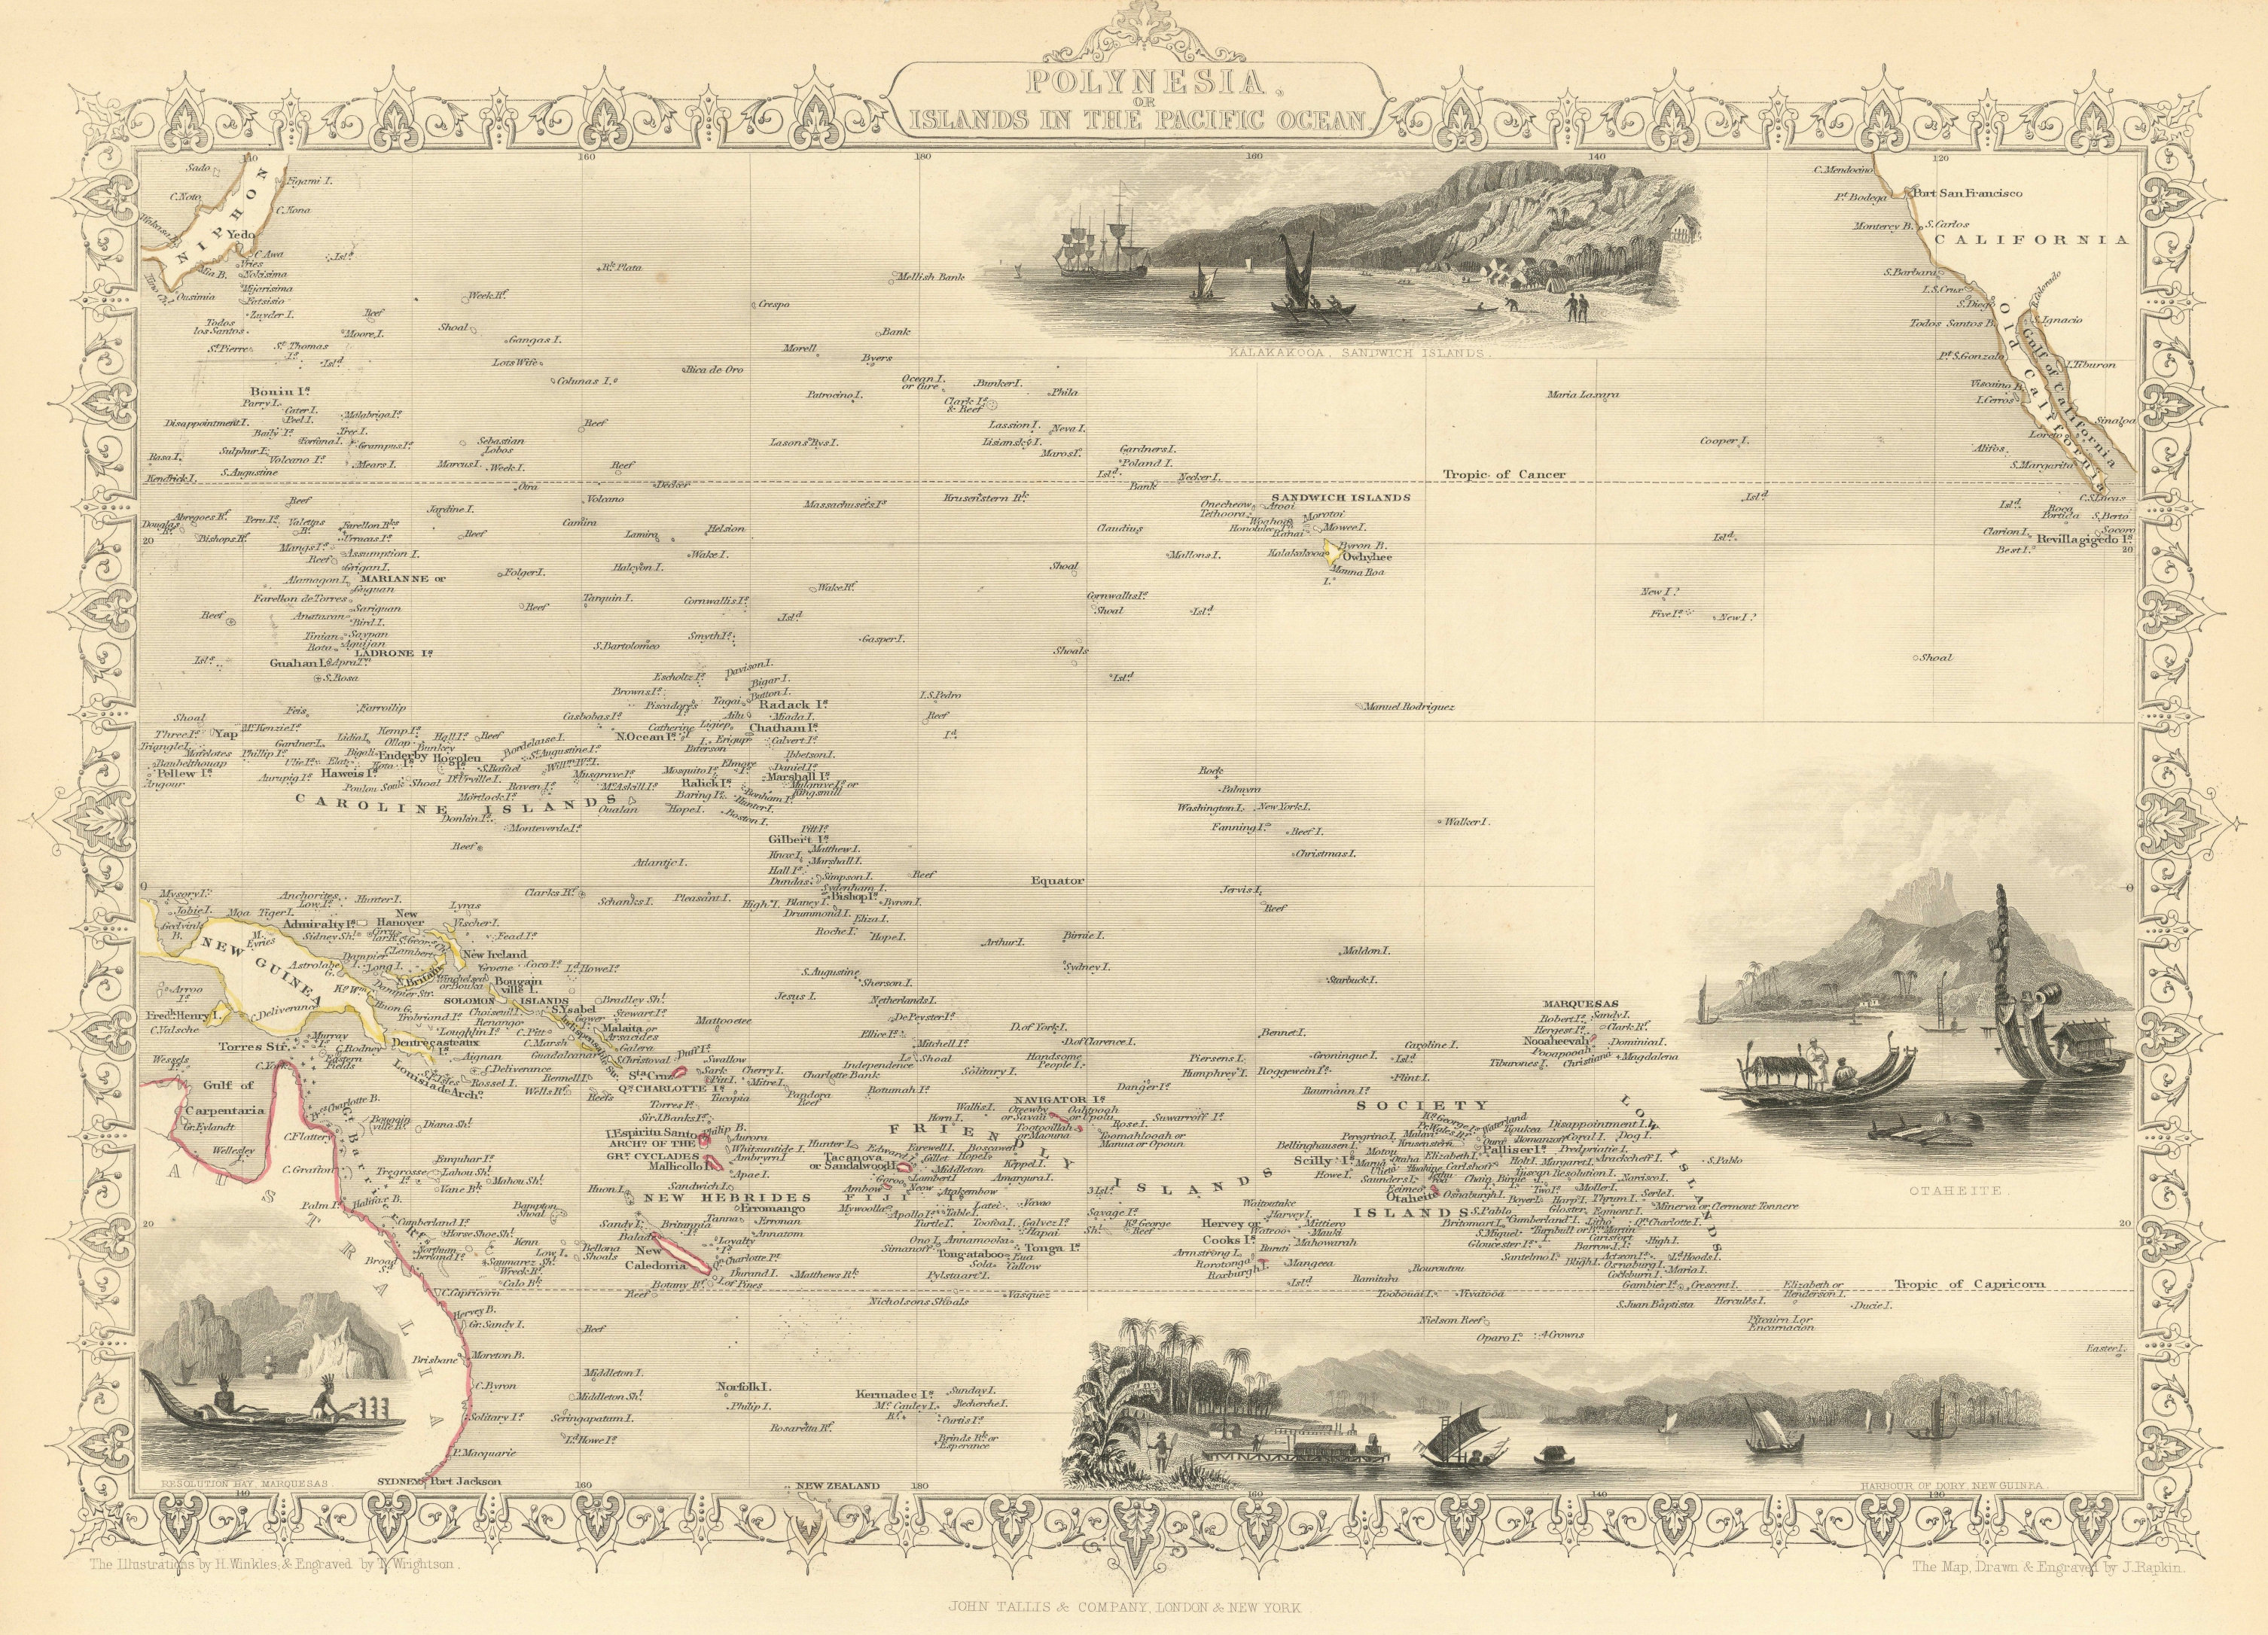 Associate Product POLYNESIA/PACIFIC ISLANDS. inc Sandwich/Hawaiian islands. RAPKIN/TALLIS 1851 map